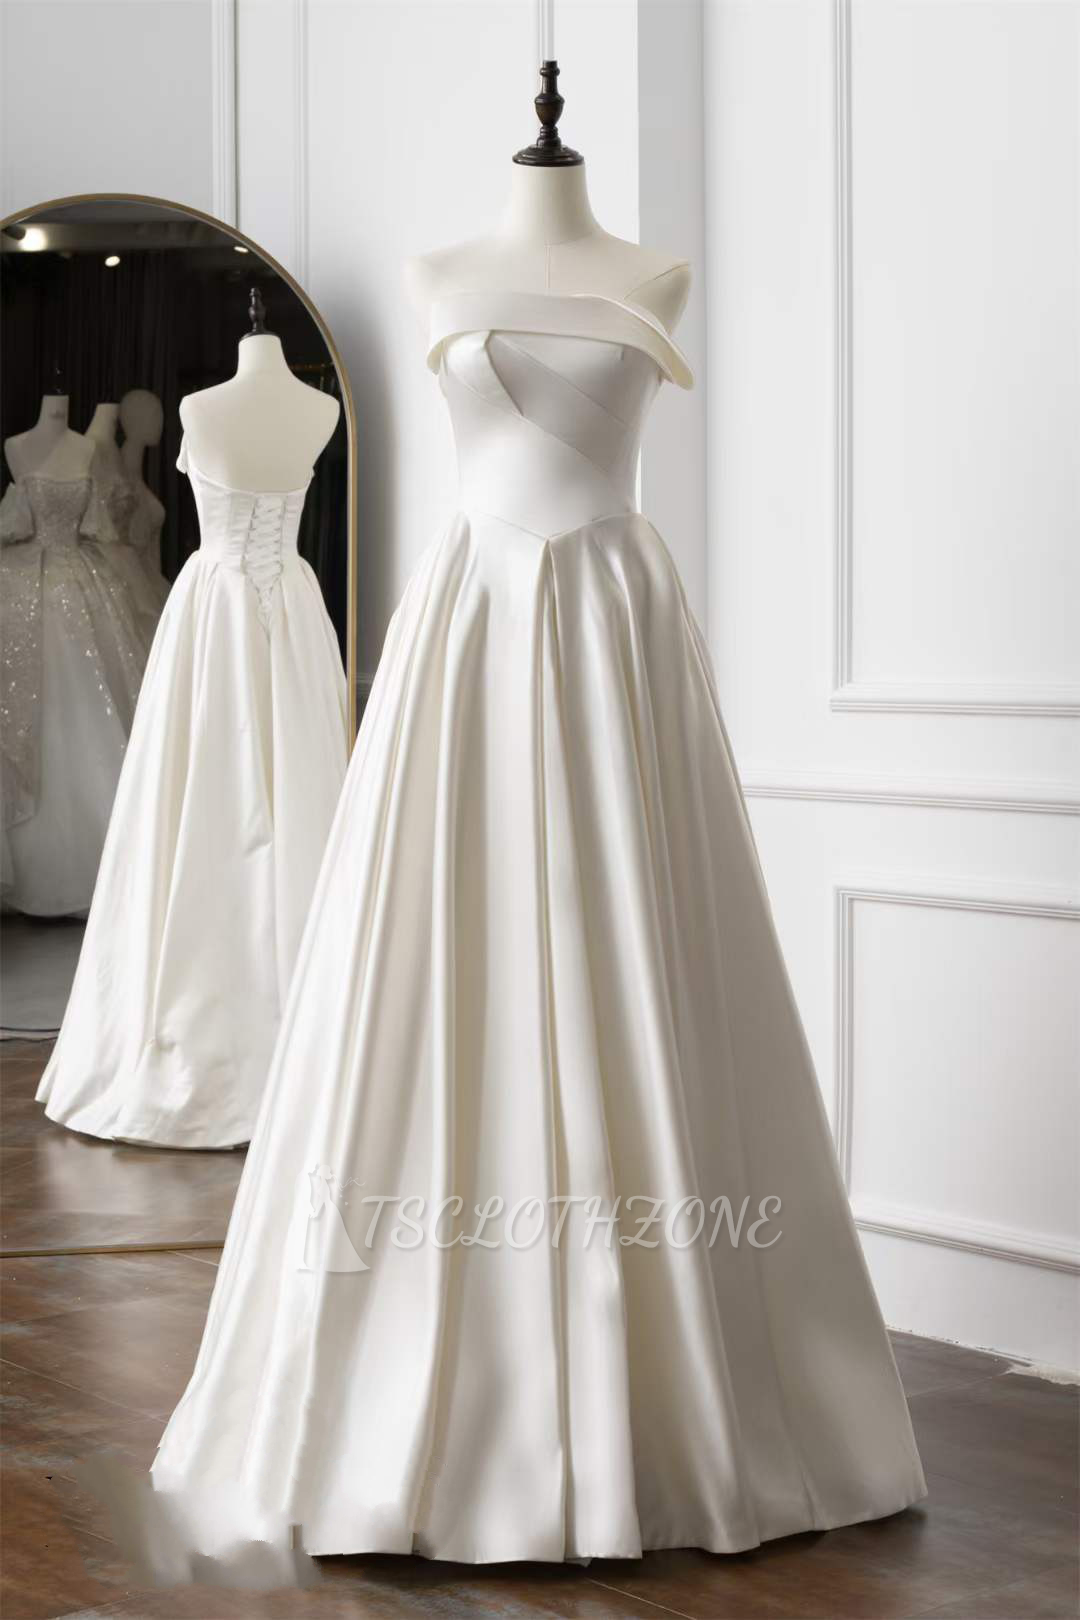 Elegant satin A-line skirt tube top wedding dress